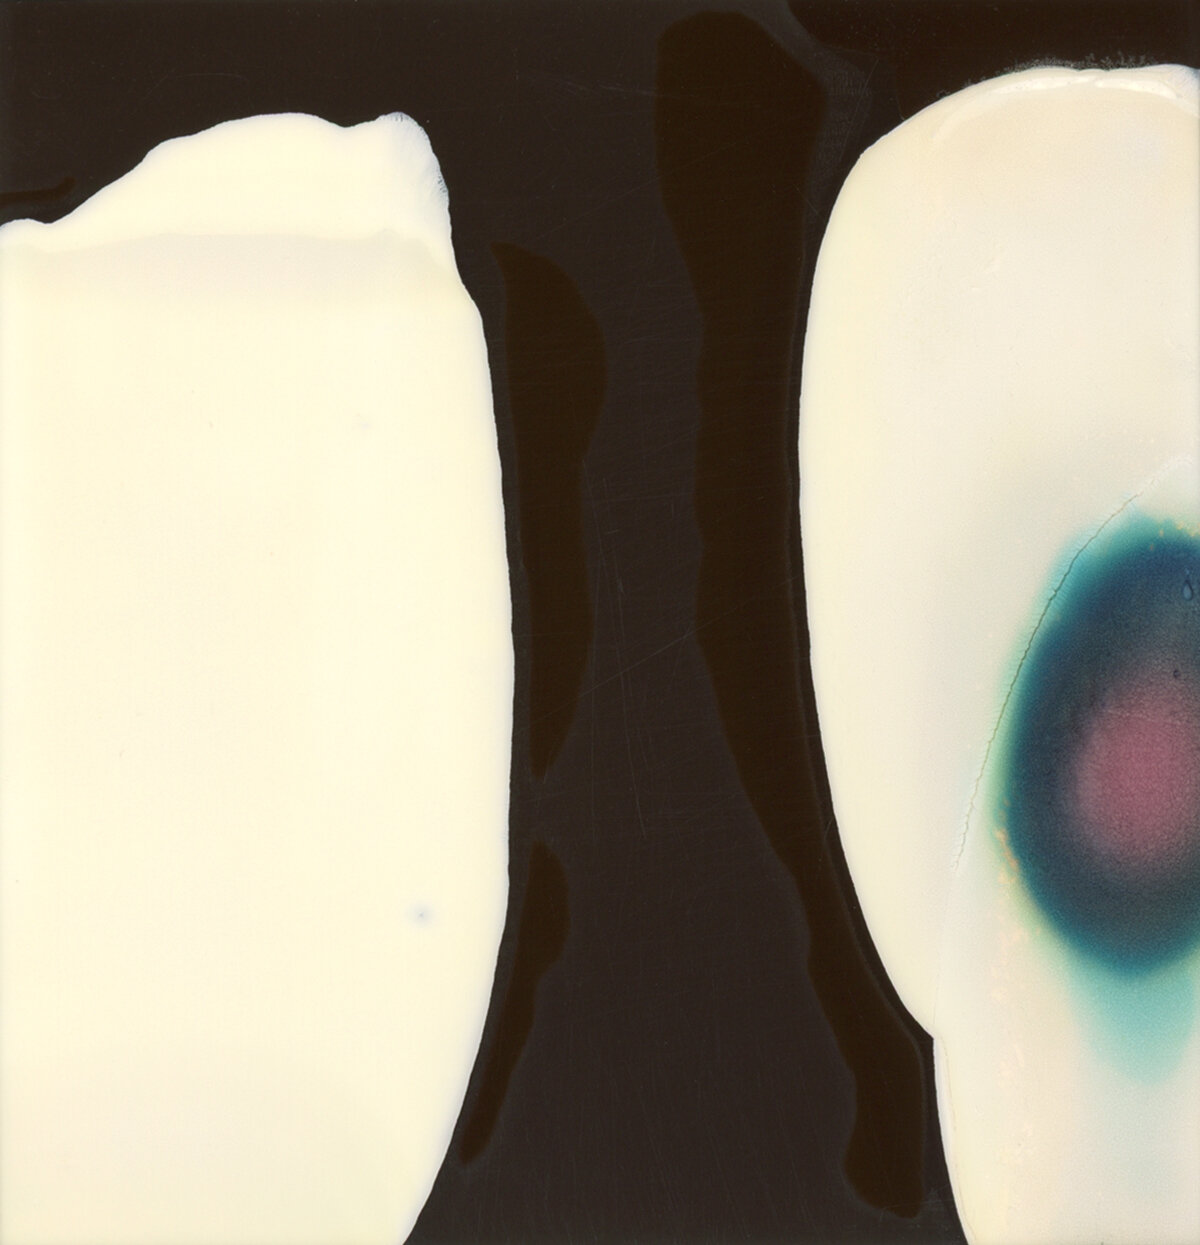   Pushed VII , 2020  Internal Dye Diffusion Print (Polaroid)  4.25” x 3.5” 